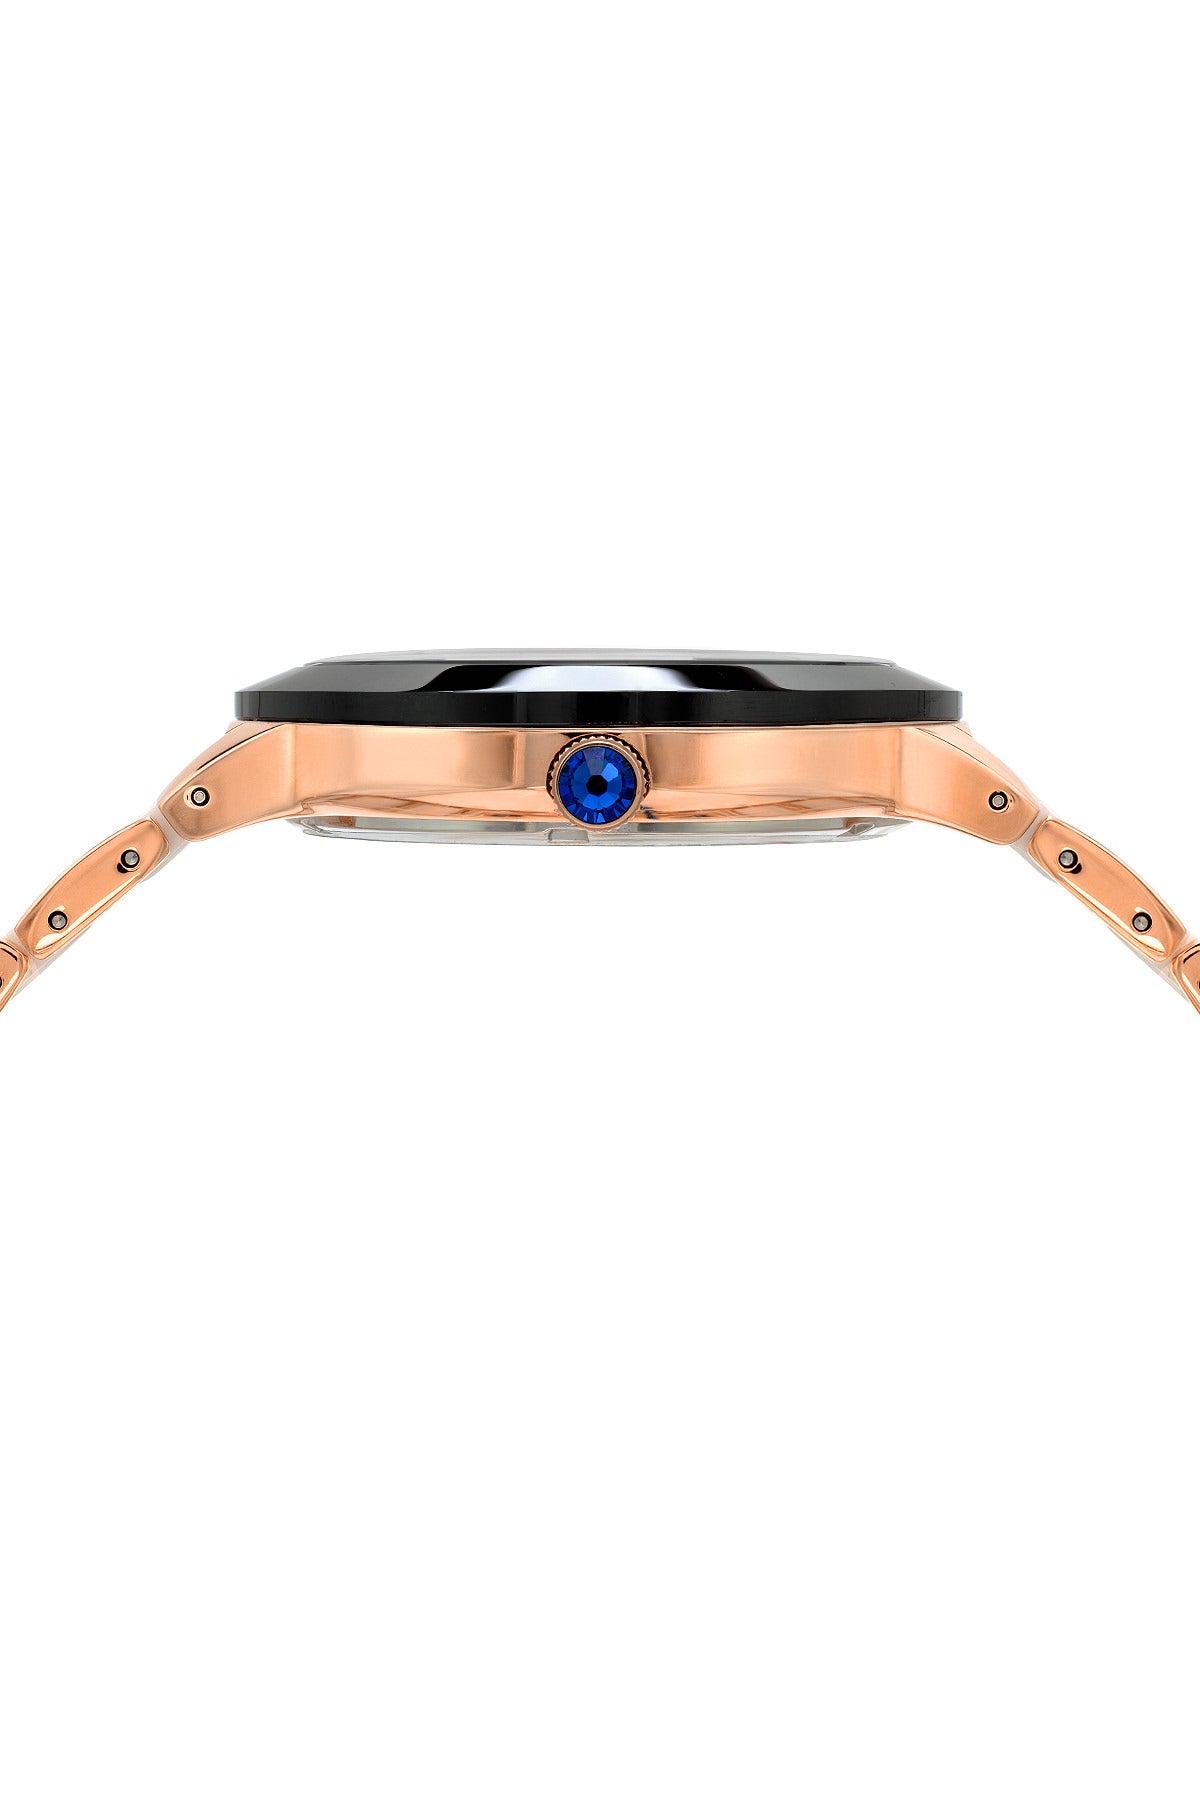 Porsamo Bleu Clarissa luxury women's ceramic watch, rose, black 552CCLC